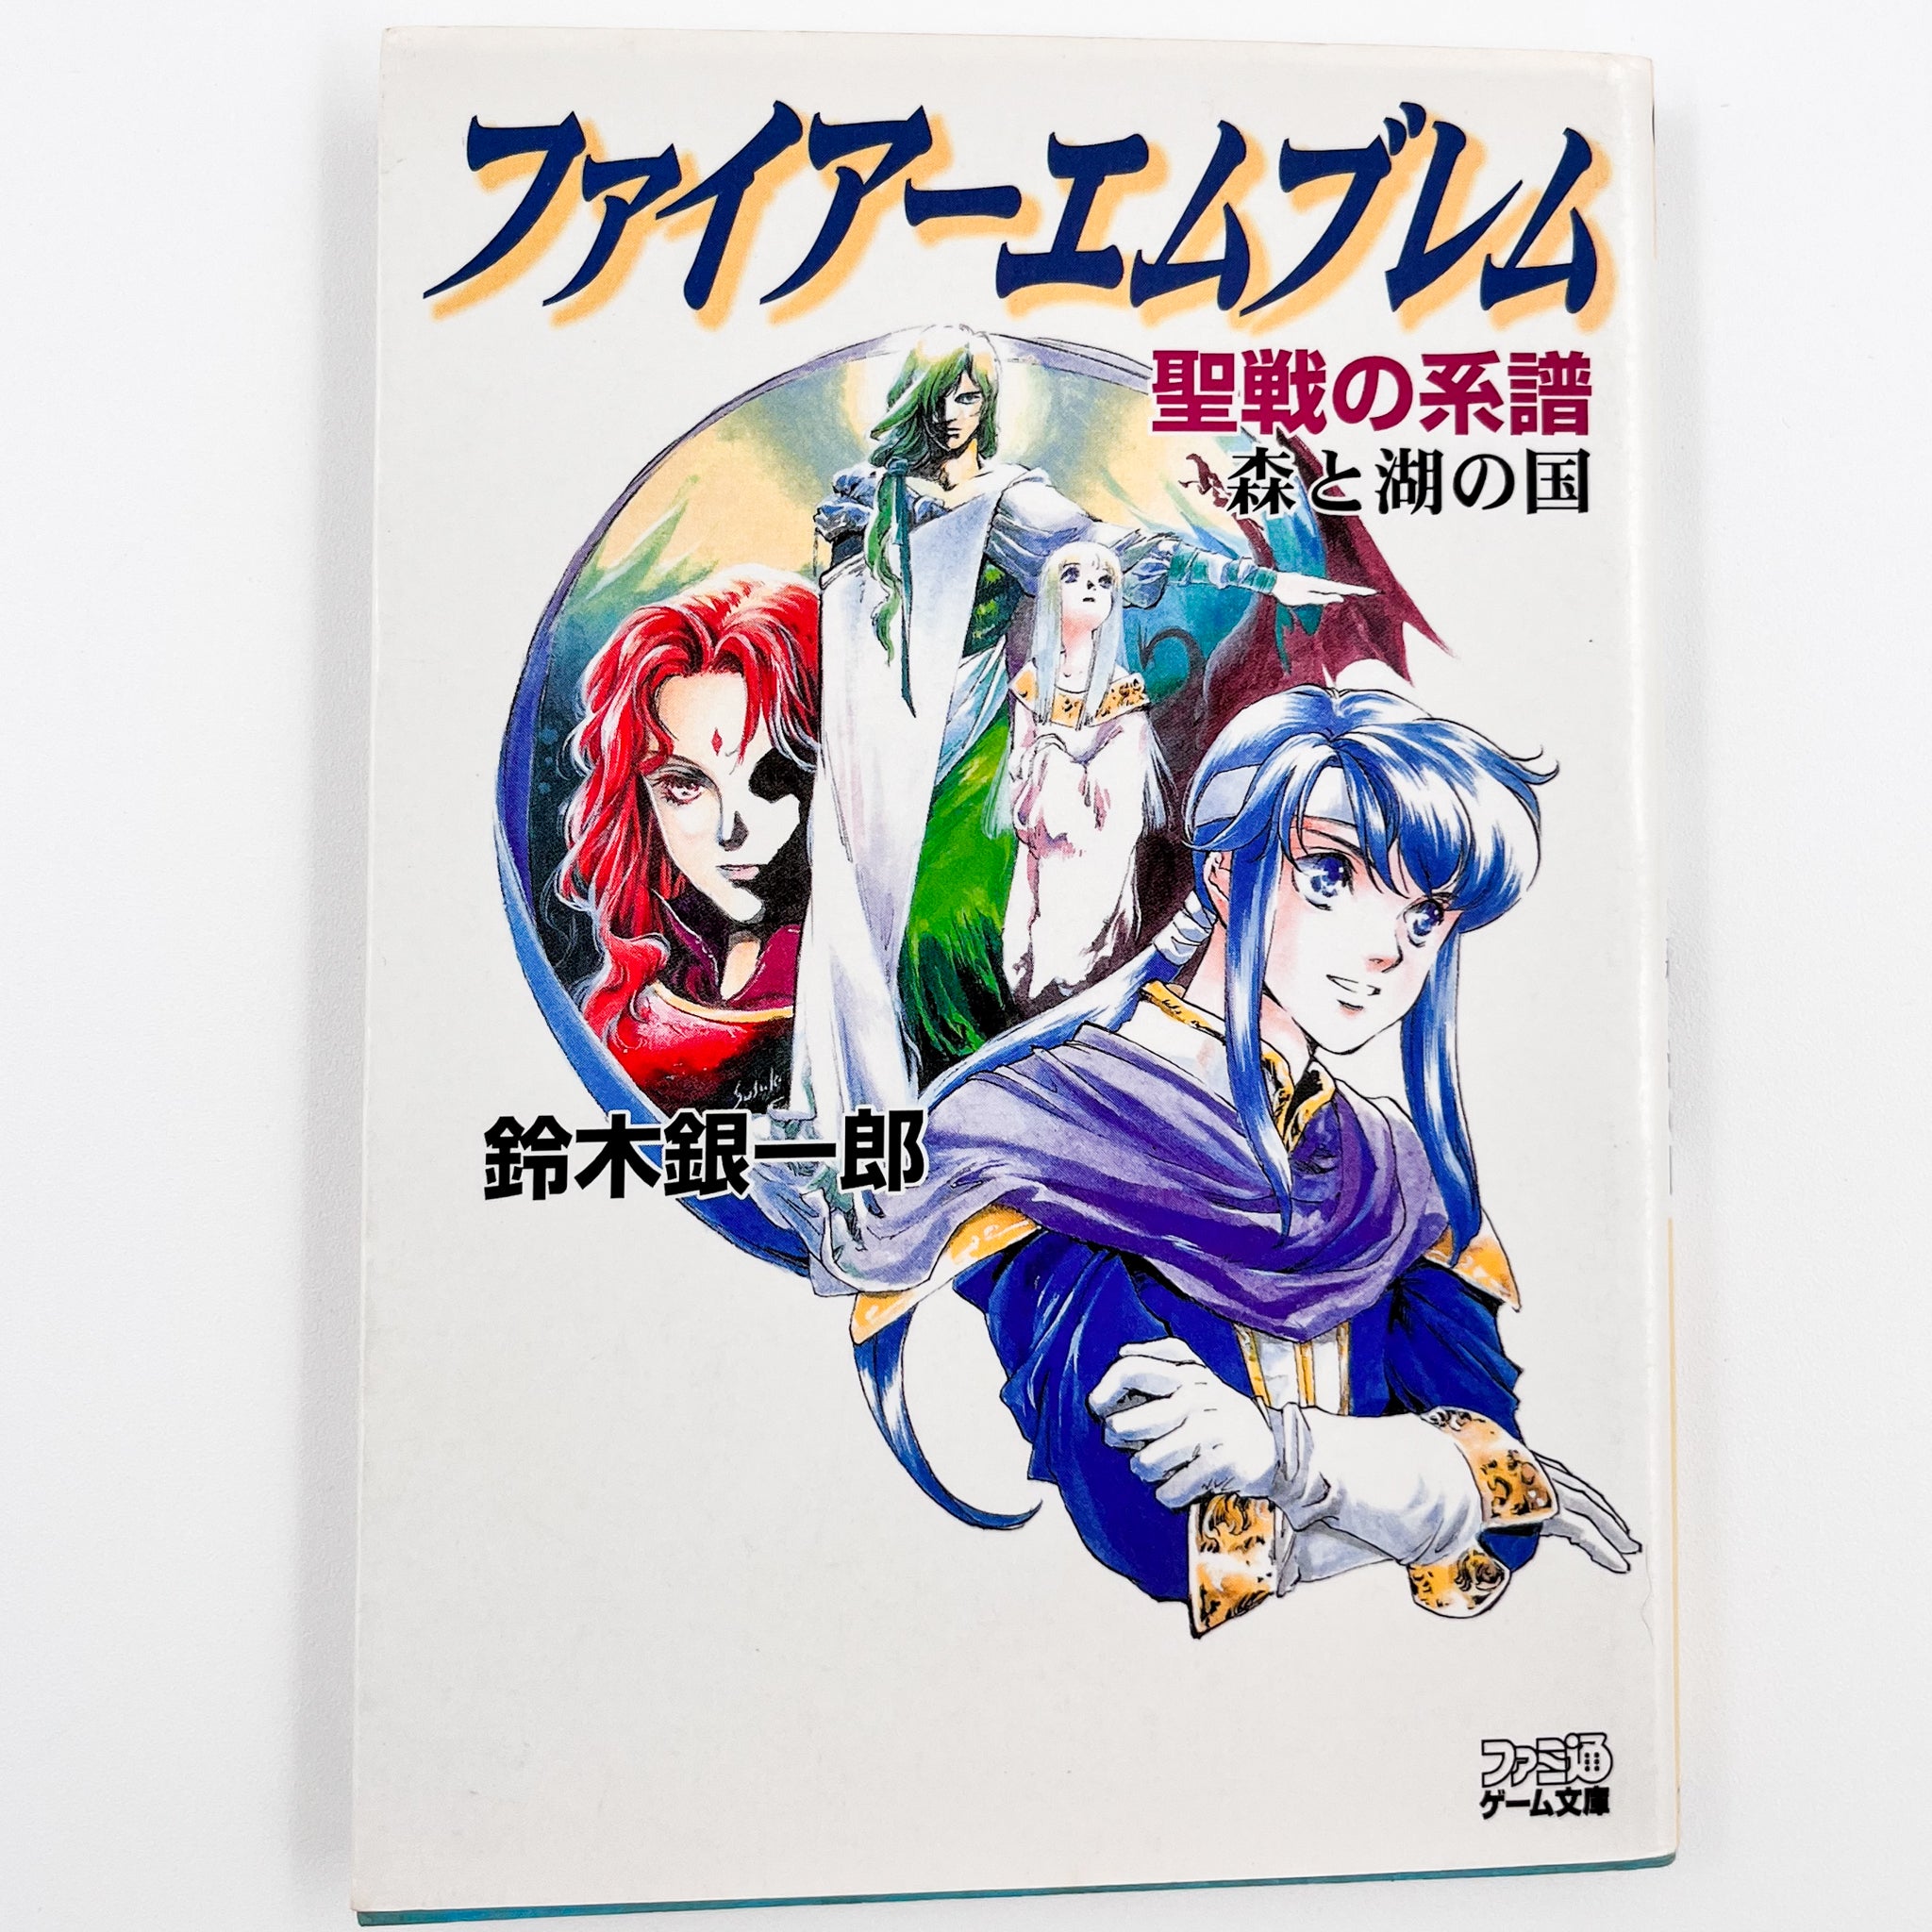 Fire Emblem: Genealogy of the Holy War - Mori to Mizuumi no Kuni light novel front cover